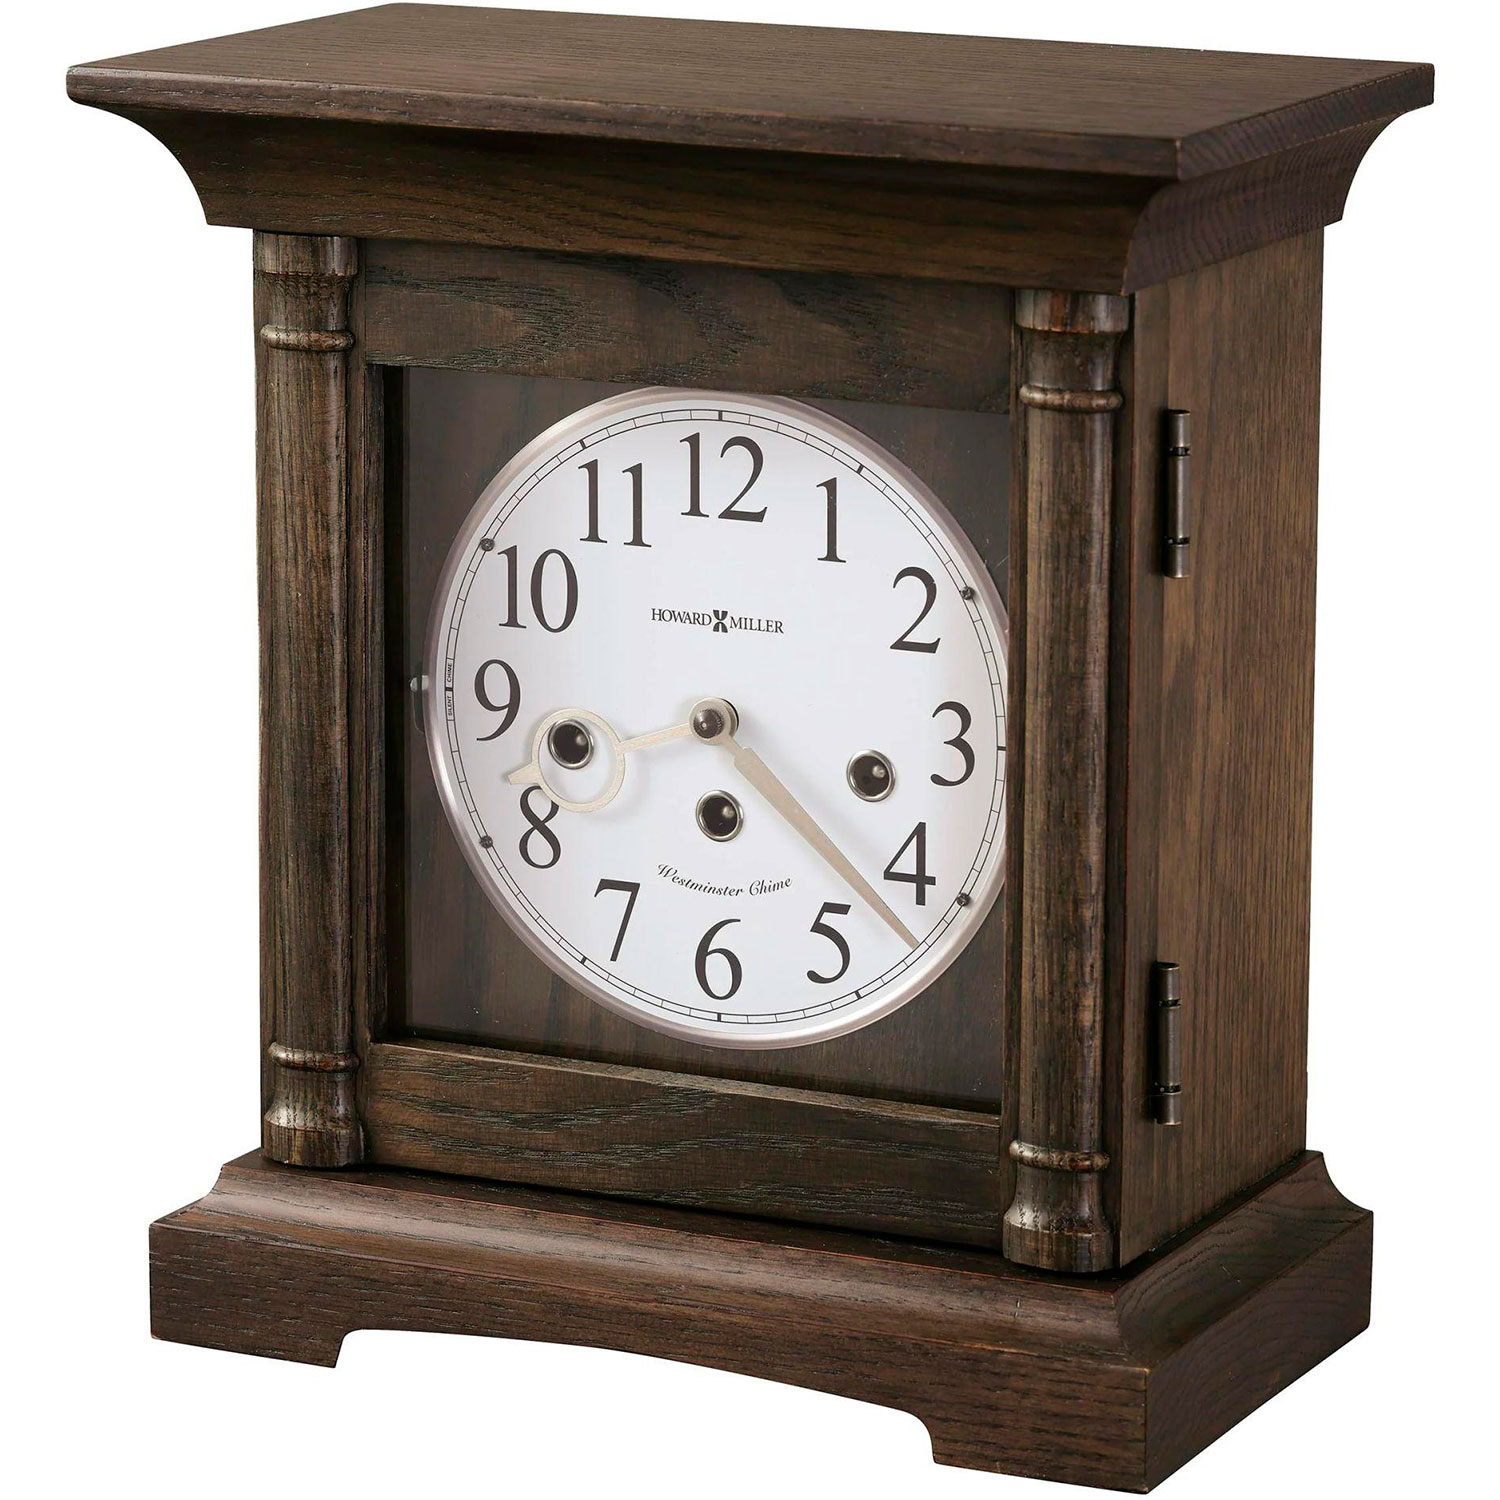 Настольные часы Howard miller 630-280 цена и фото